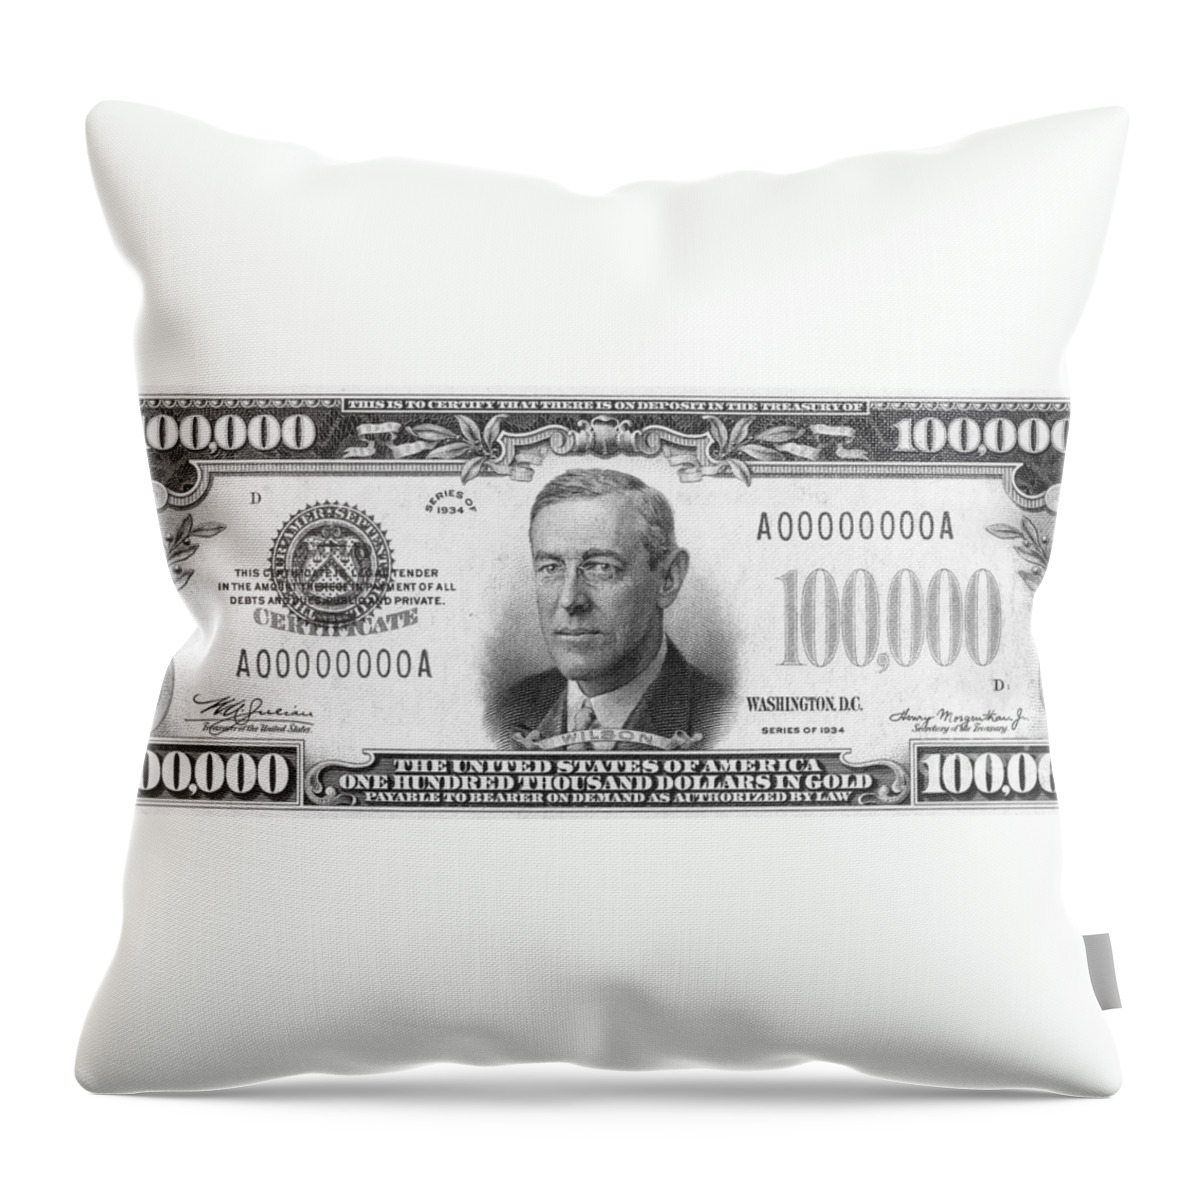 100 Throw Pillow featuring the photograph 100,000 Dollar Bill #100000 by Granger